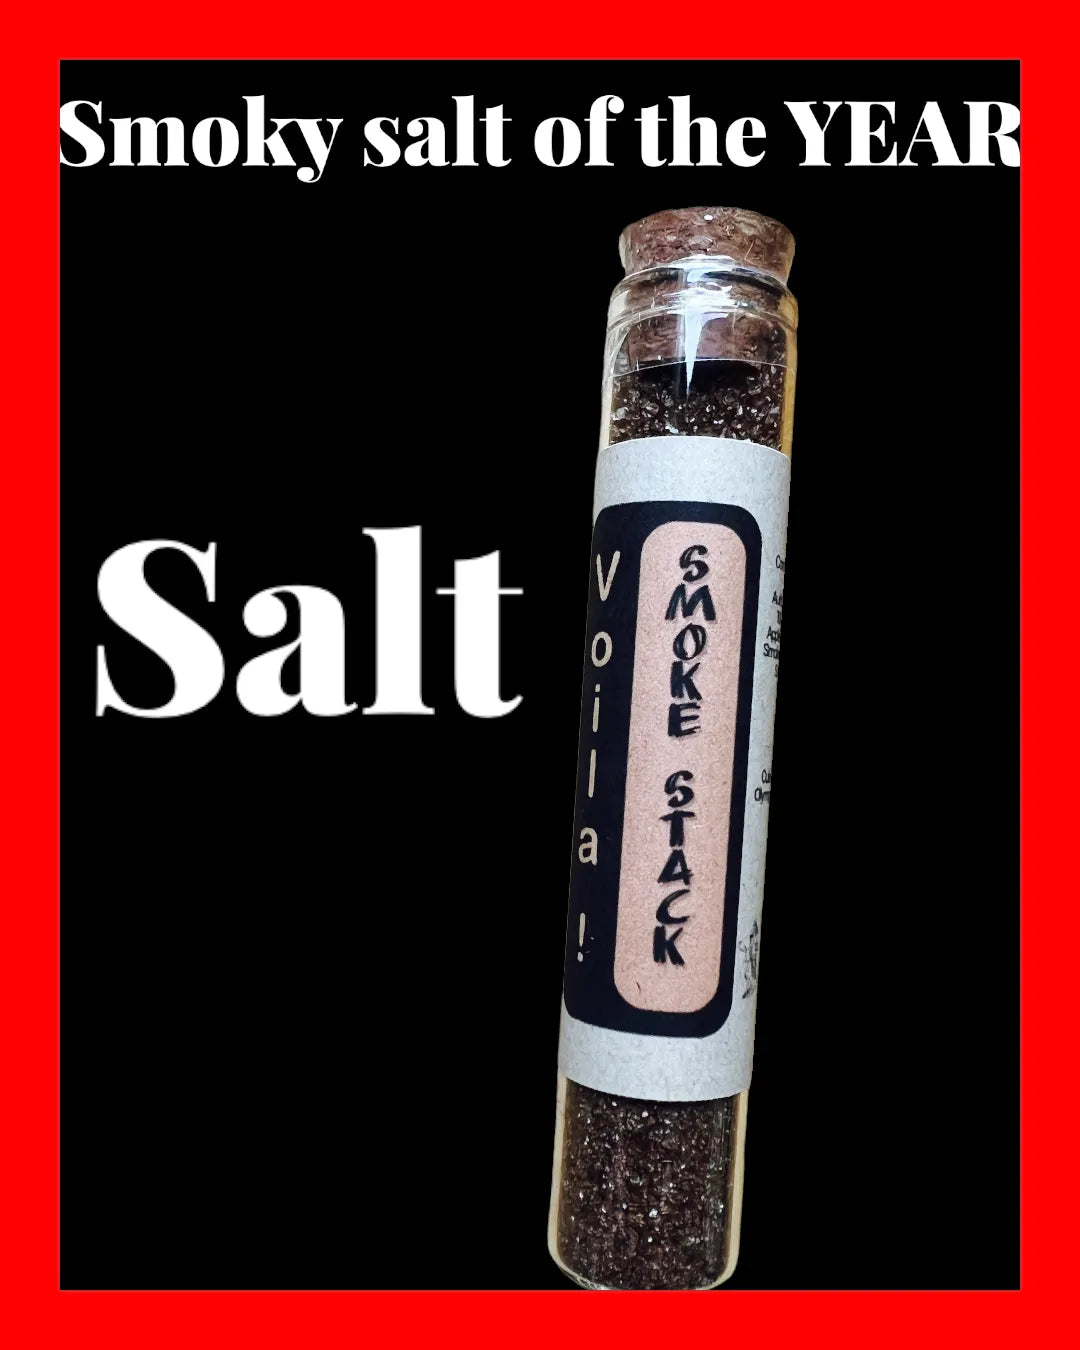 Smokestack! Applewood Smoked Sea Salt, Vial